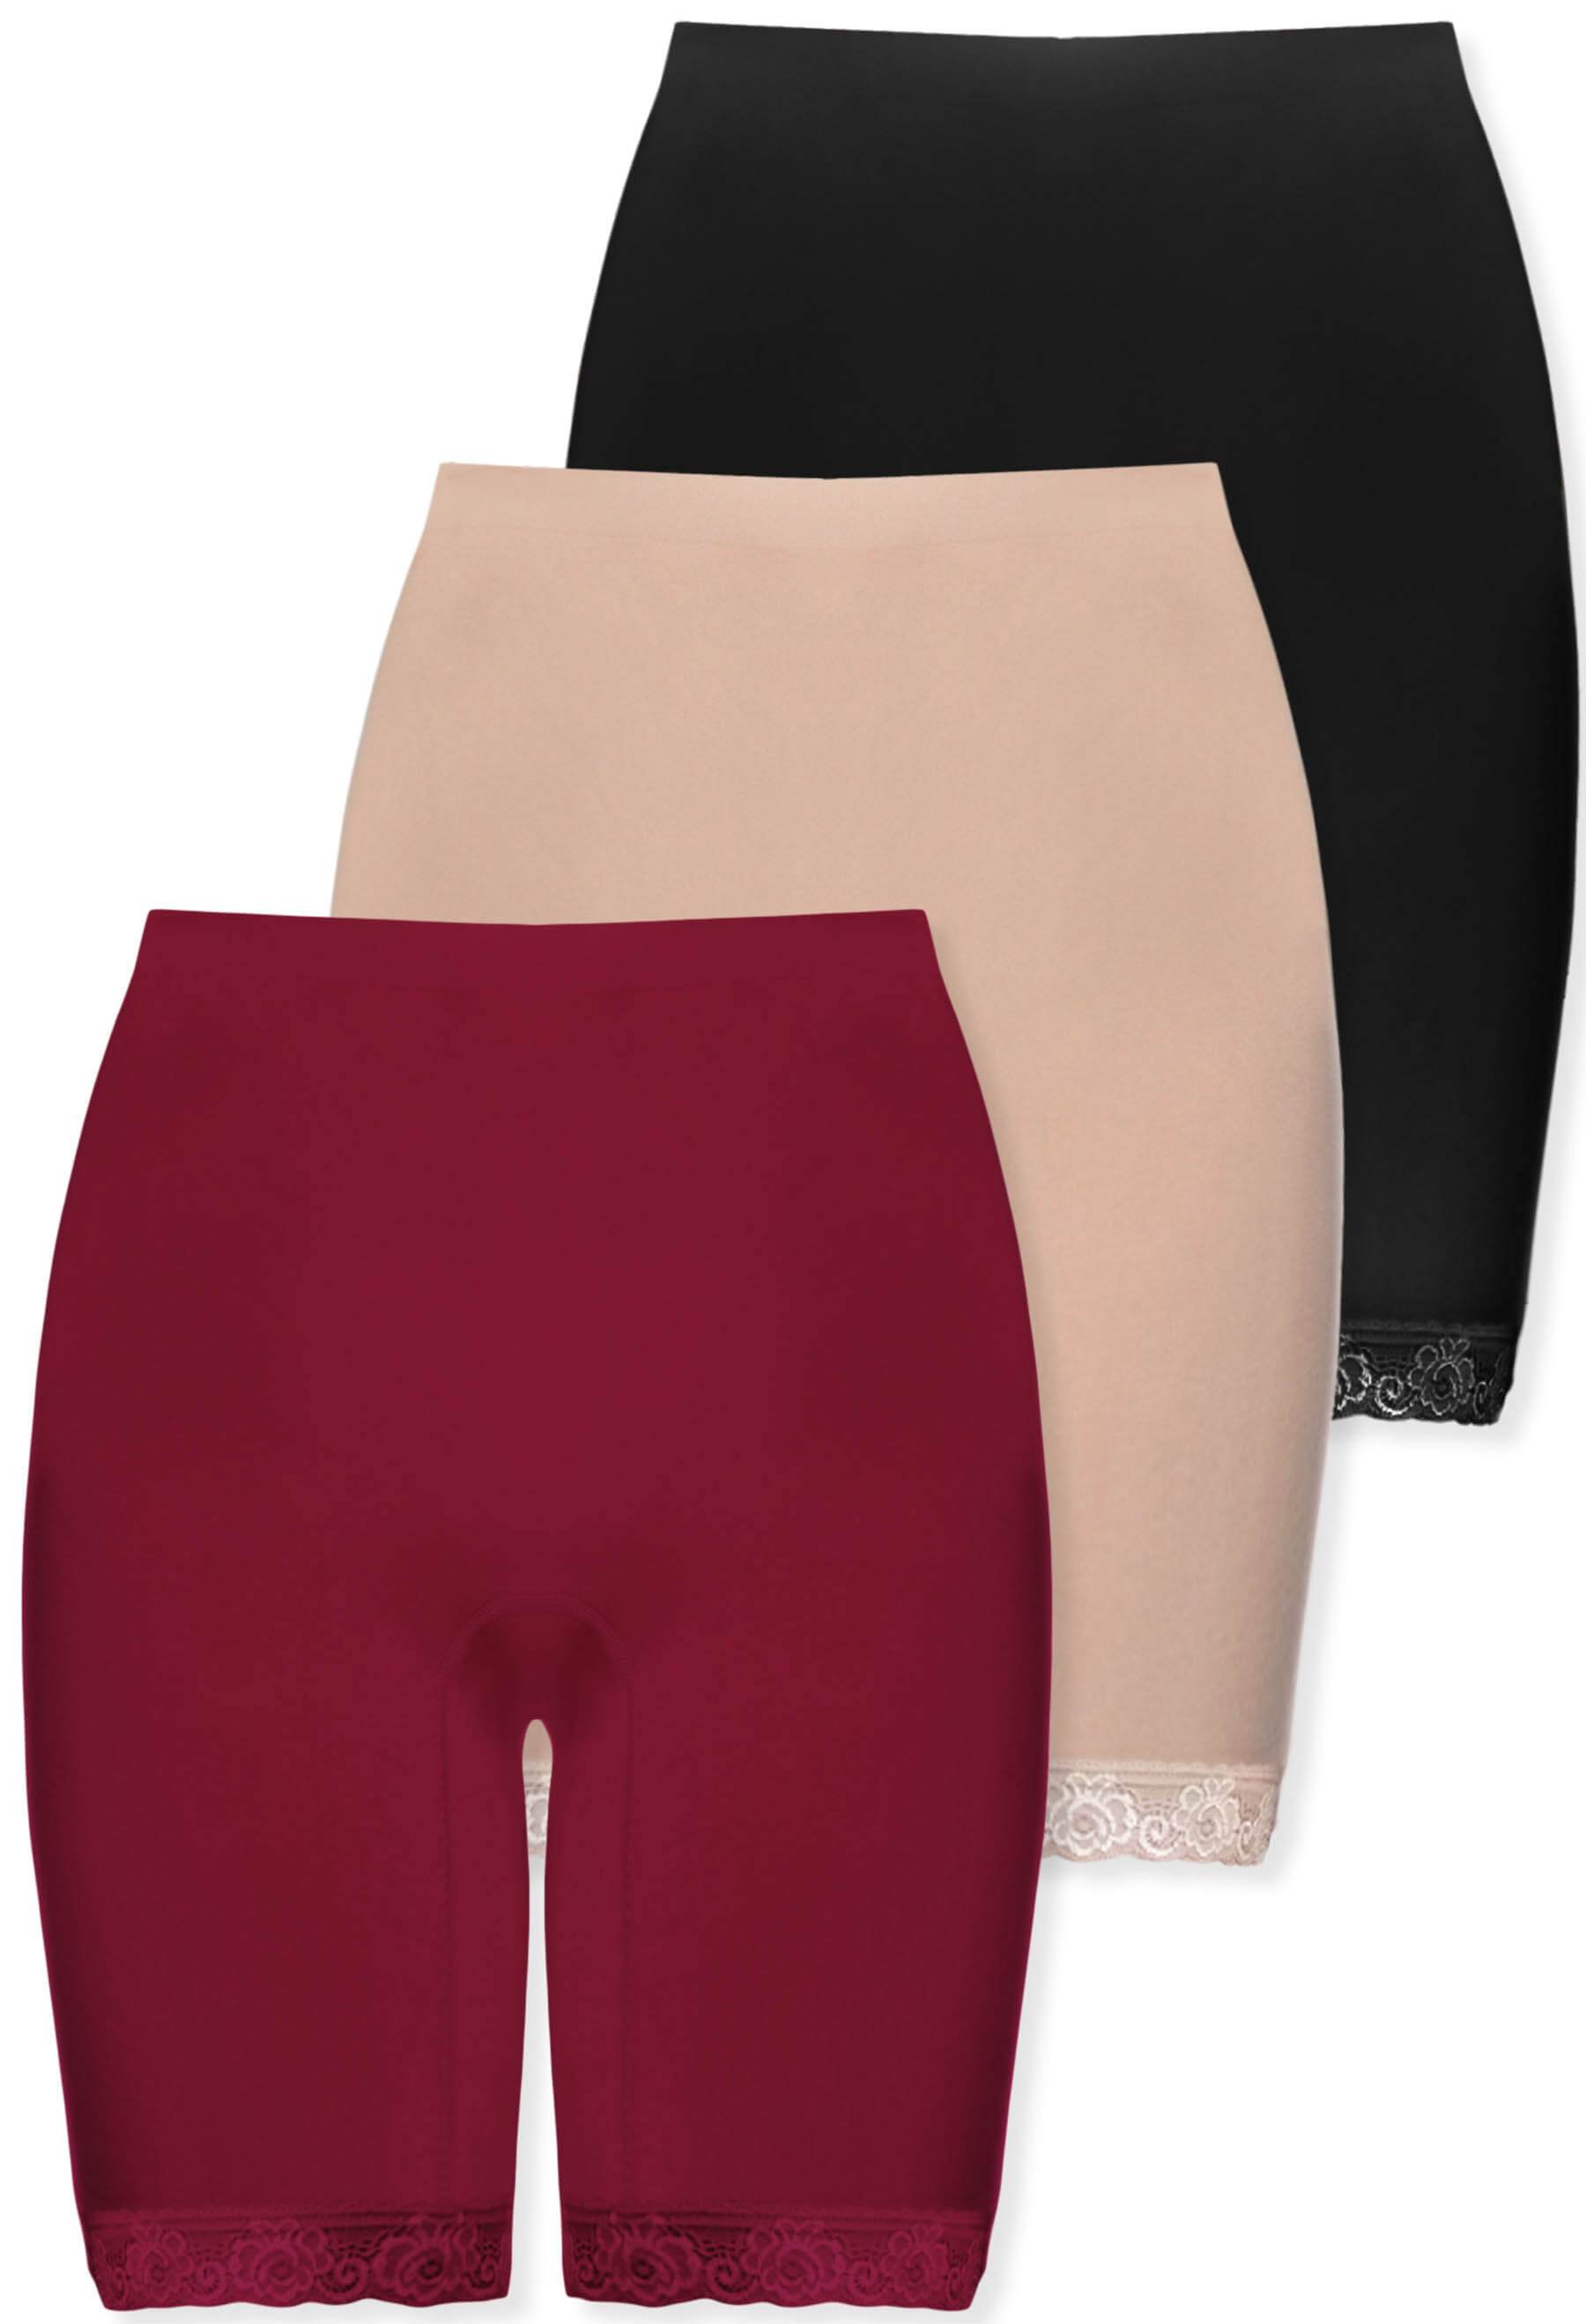 Modibodi | Anti-Chafing Shorts | Period Underwear - Girls Matters Period  Underwear